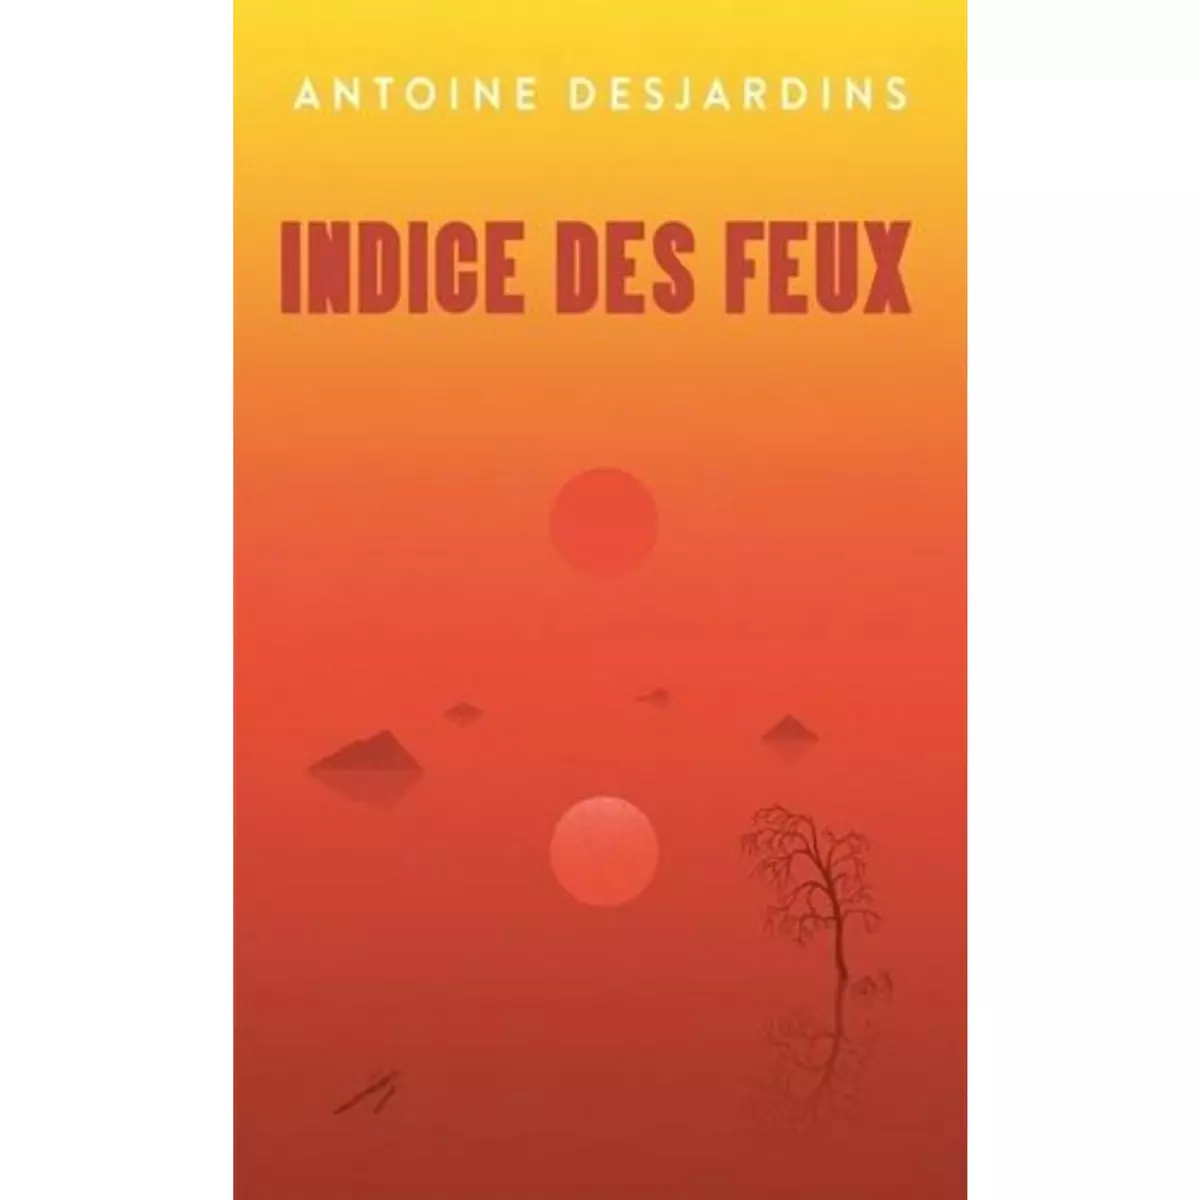  INDICE DES FEUX, Desjardins Antoine